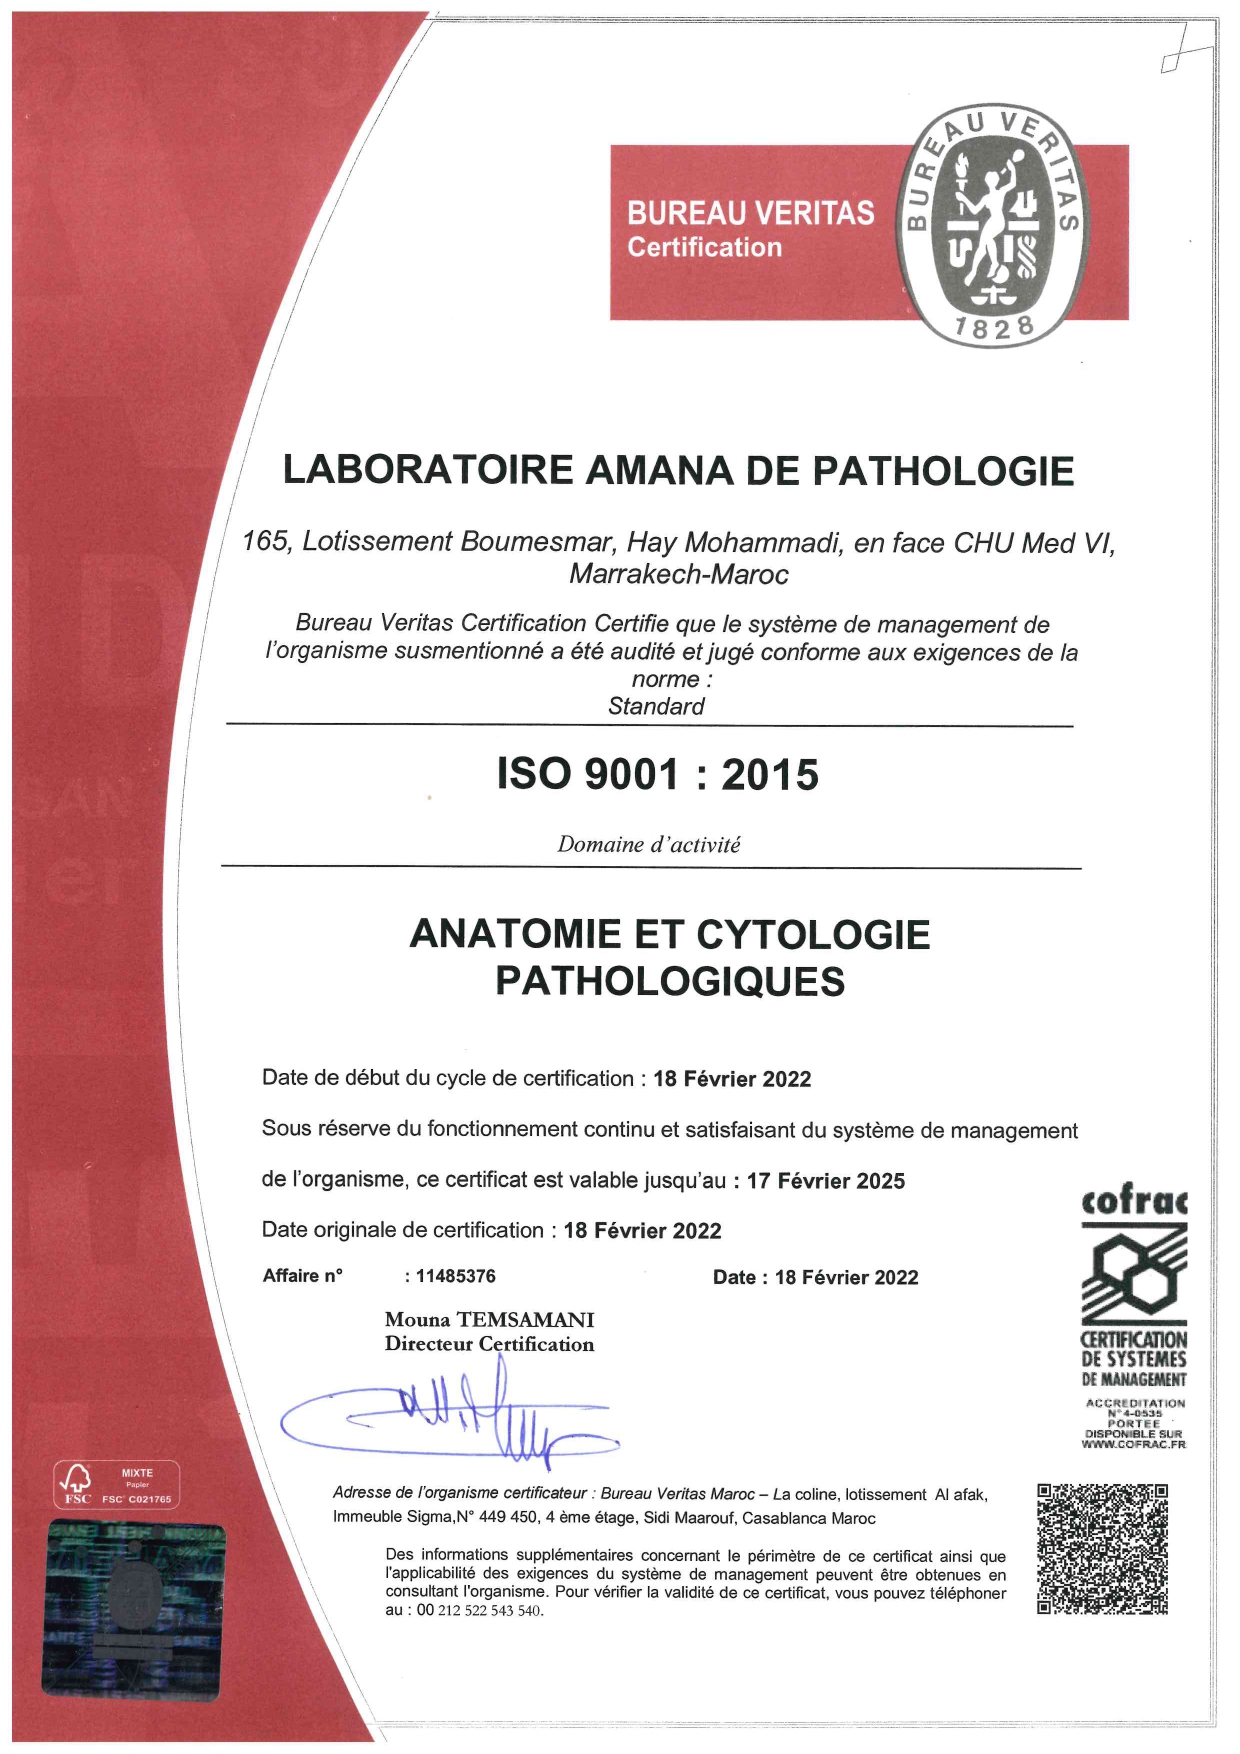 Doorzichtig Haast je verfrommeld Engagement qualité - Laboratoire Amana pathologie